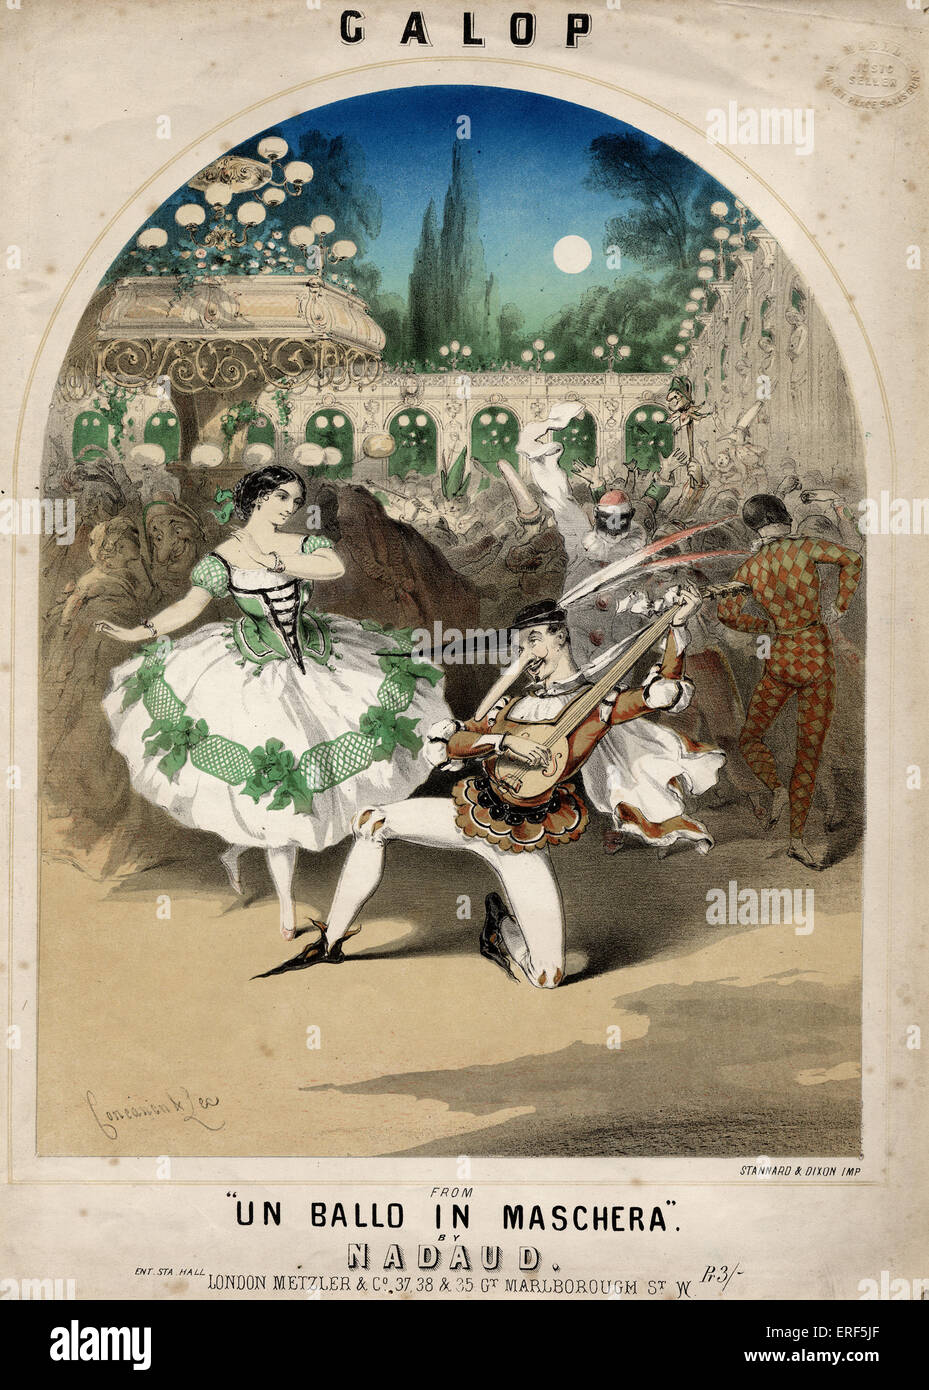 Giuseppe VERDI - UN BALLO IN MASCHERA 1862 Cover of score of 'Galop,  from 'Un Ballo in Maschera' by Nadaud showing scene from Stock Photo